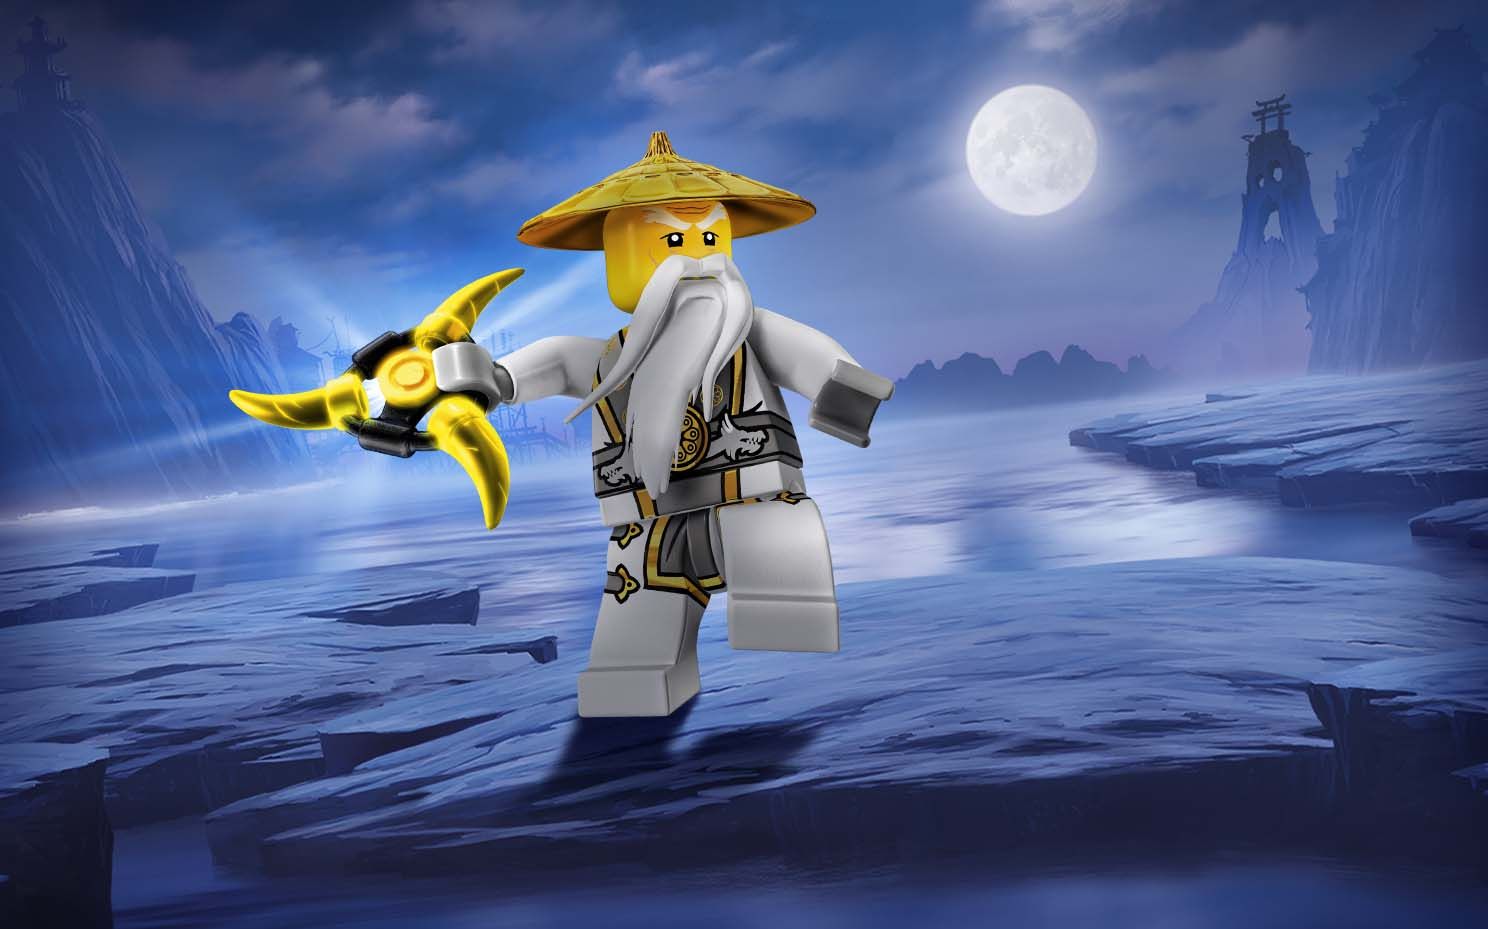 Sensei Wu From Kai - The Lego Ninjago Movie Wallpapers